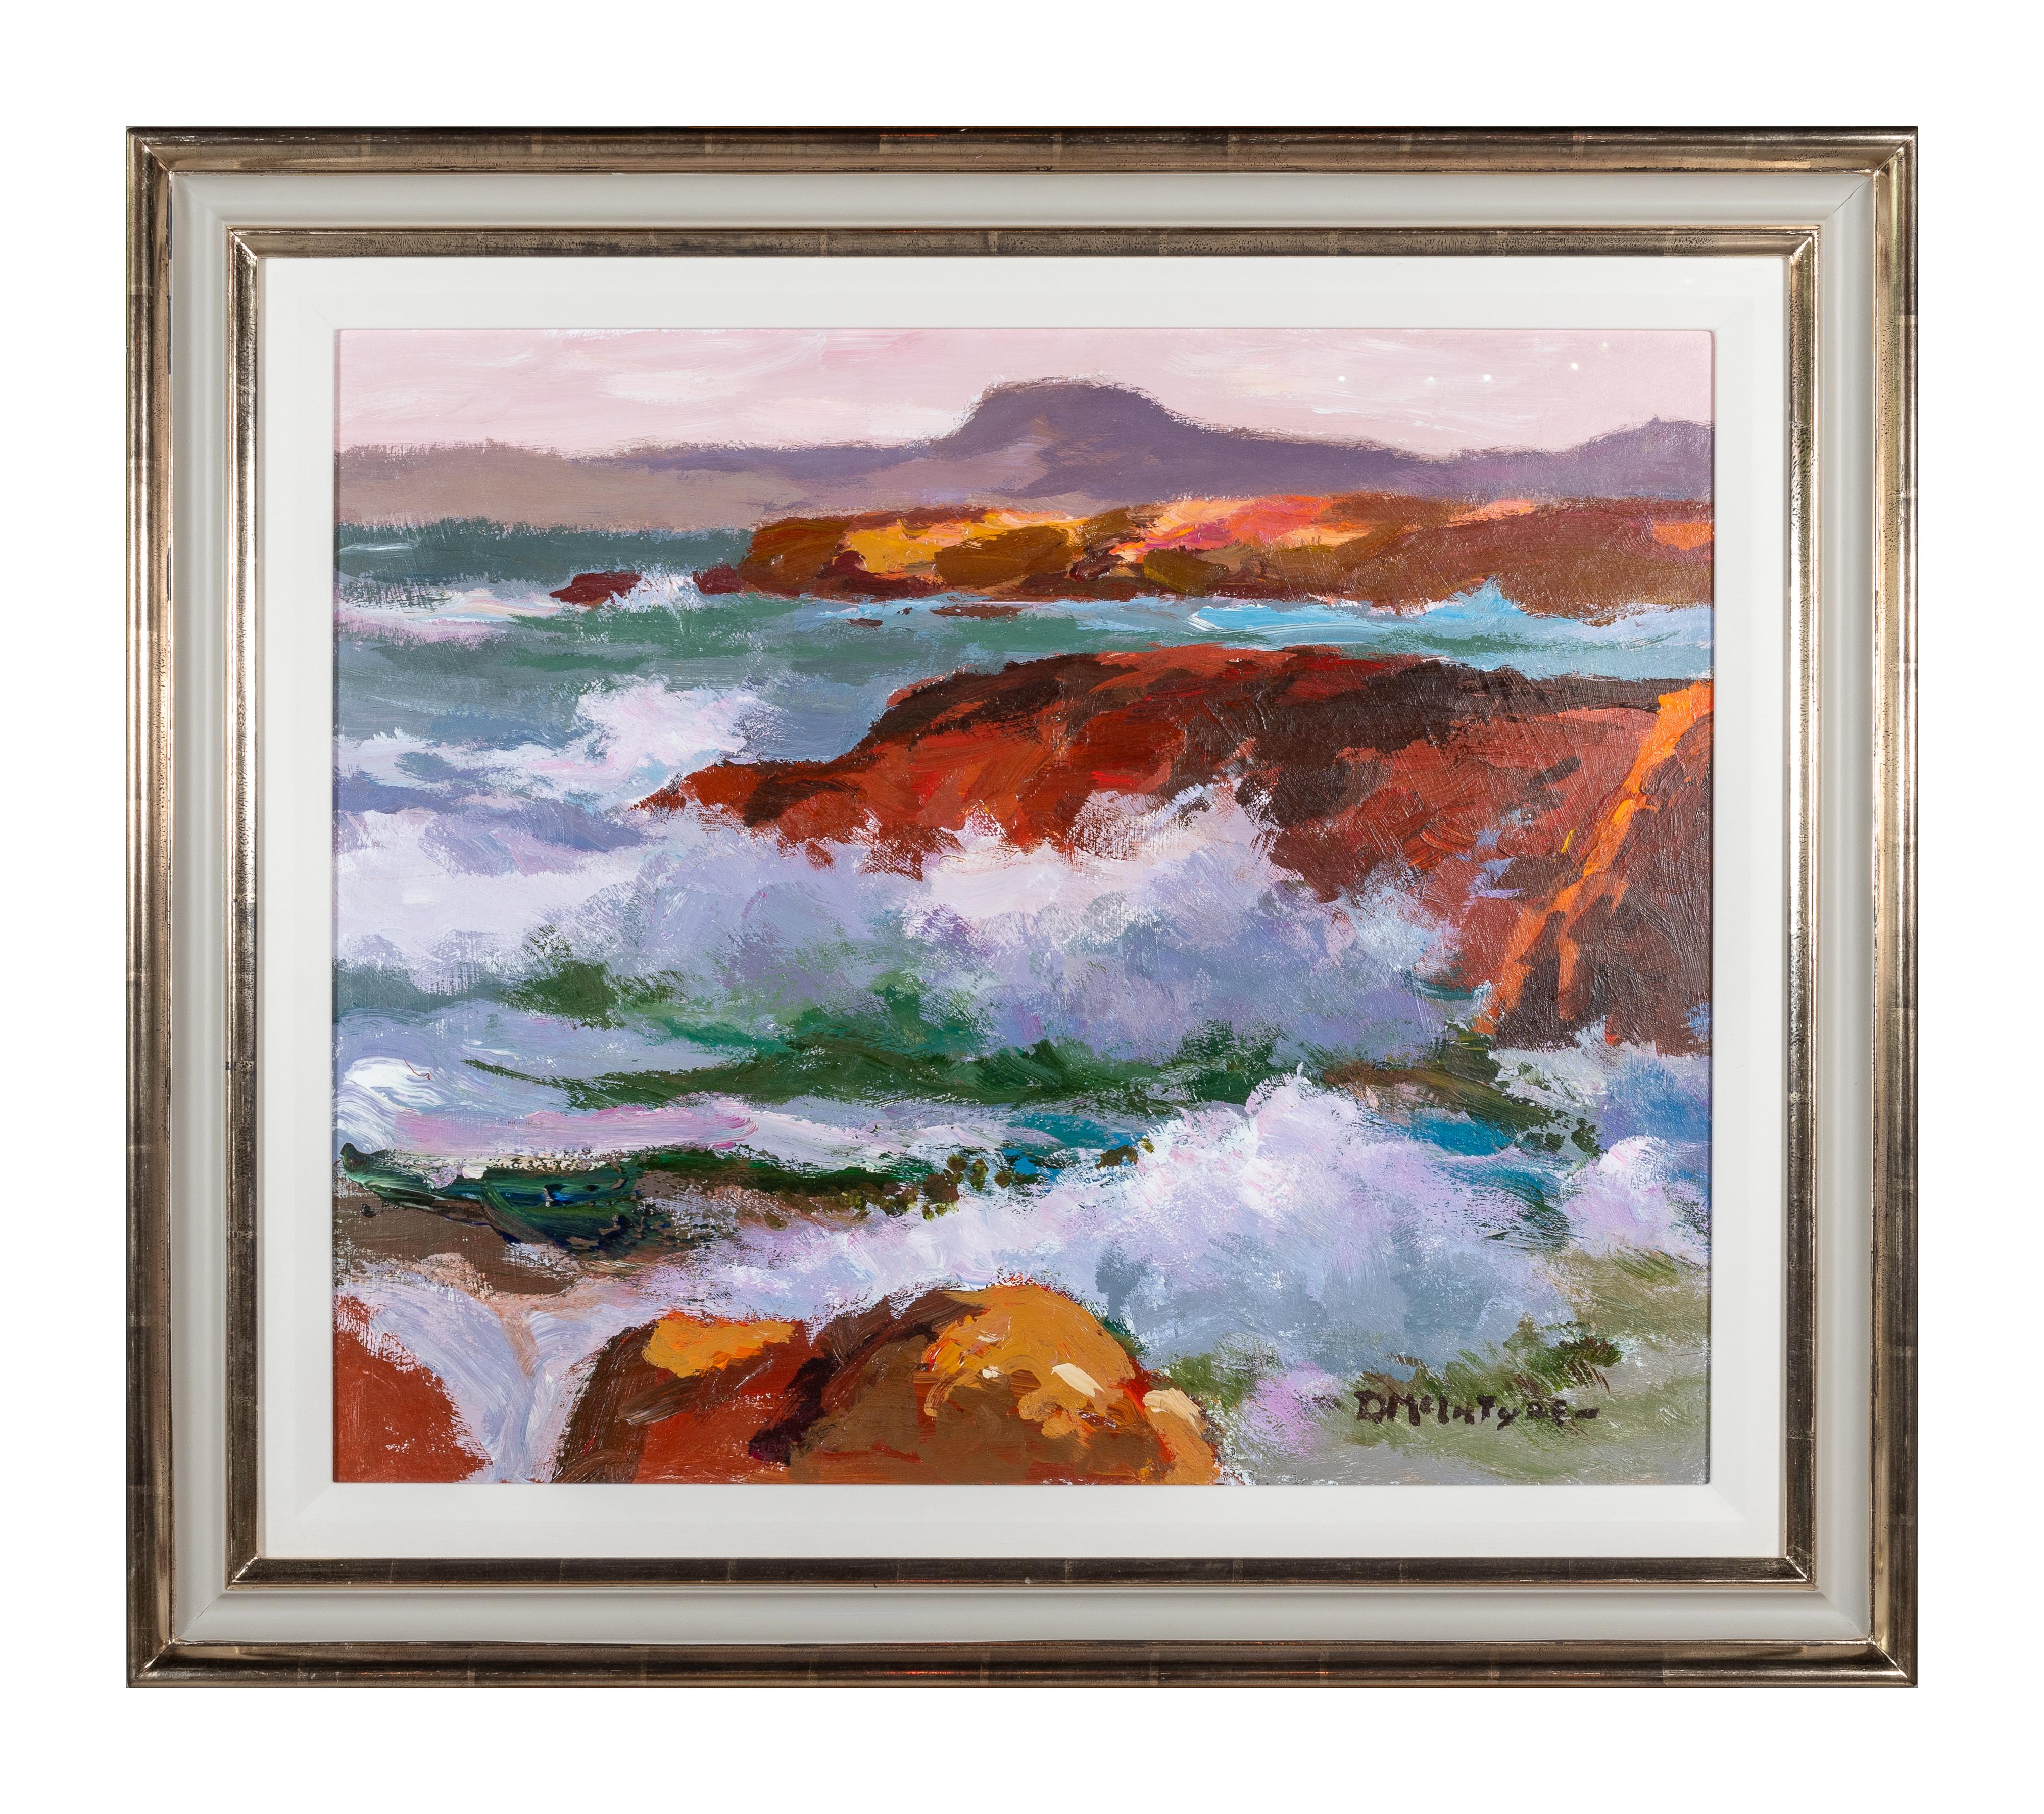 Donald McIntyre Landscape Painting - 'Western Seas' 20th century painting of the scottish coastline, rocks, waves